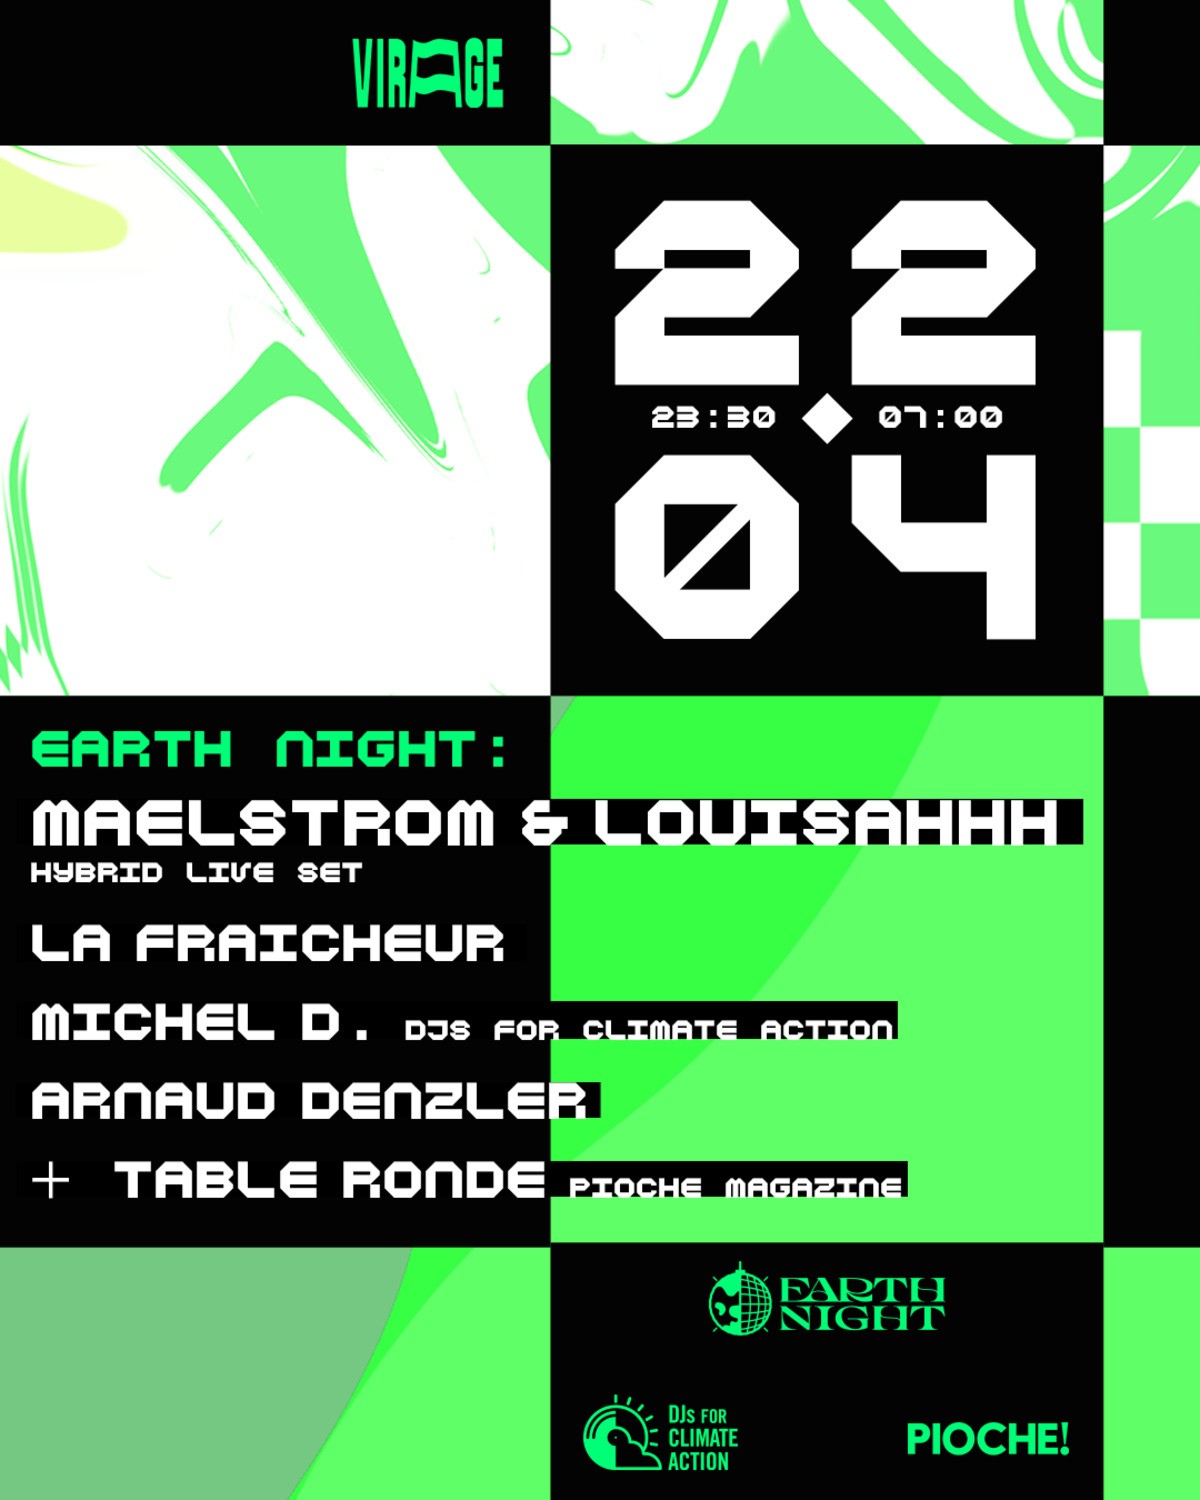 EARTH NIGHT - 22 AVRIL - VIRAGE CLUB